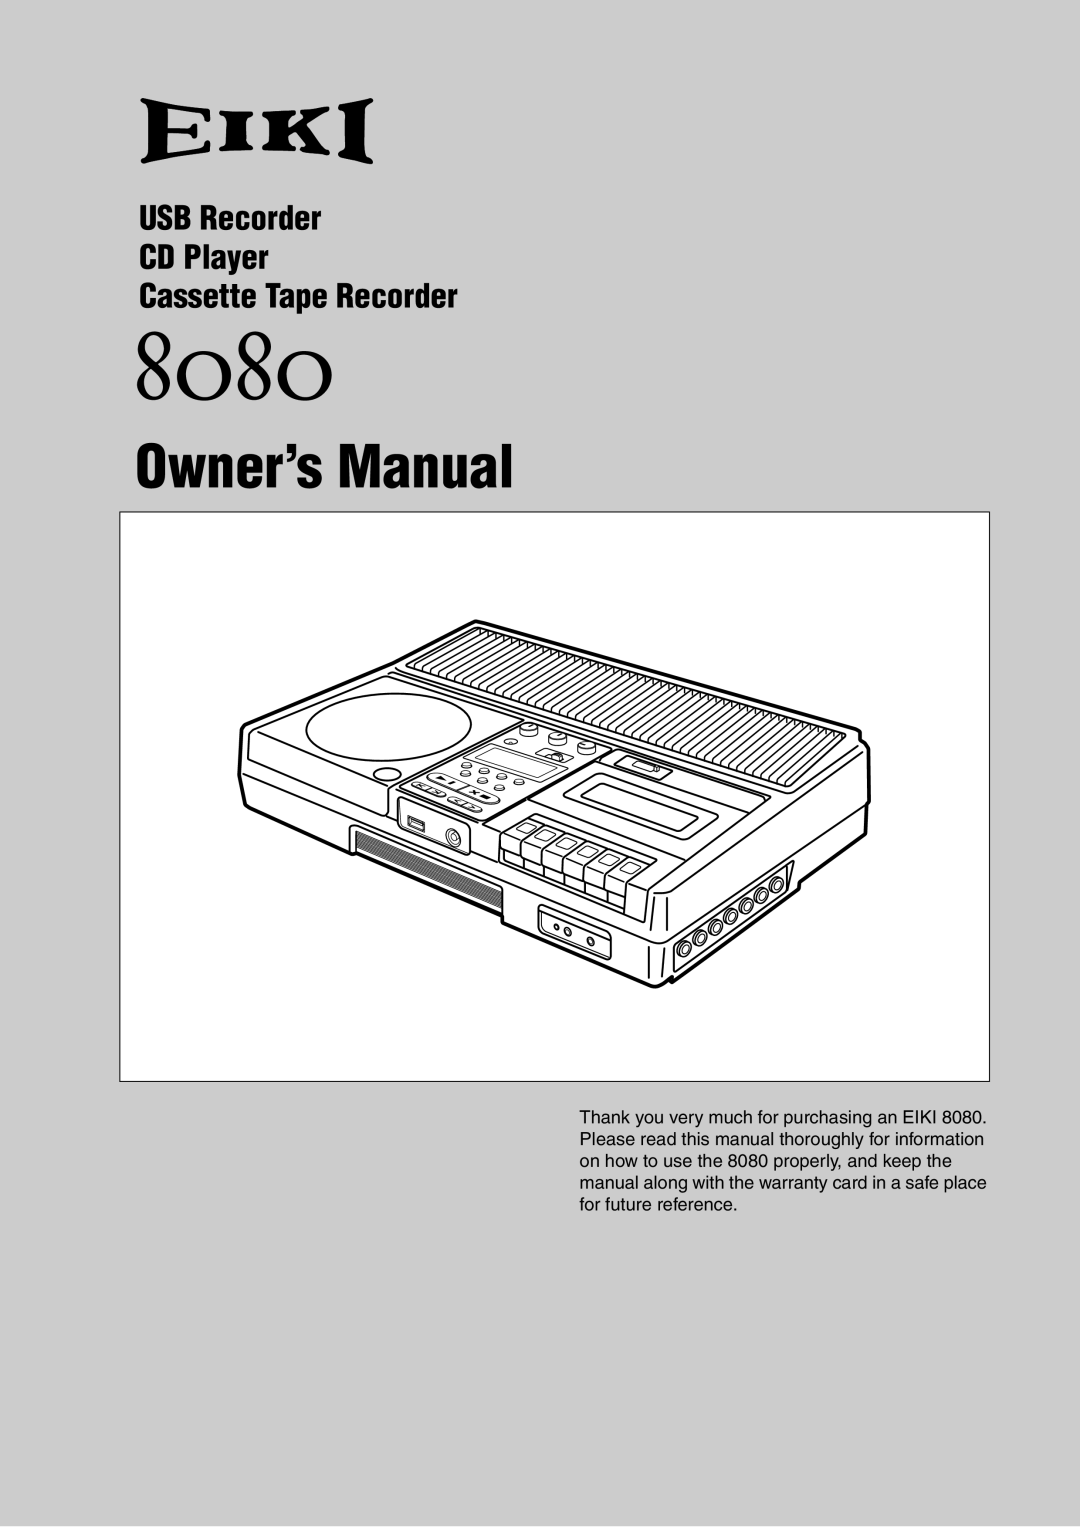 Eiki 8080 owner manual Owner’s Manual, USB Recorder CD Player Cassette Tape Recorder 